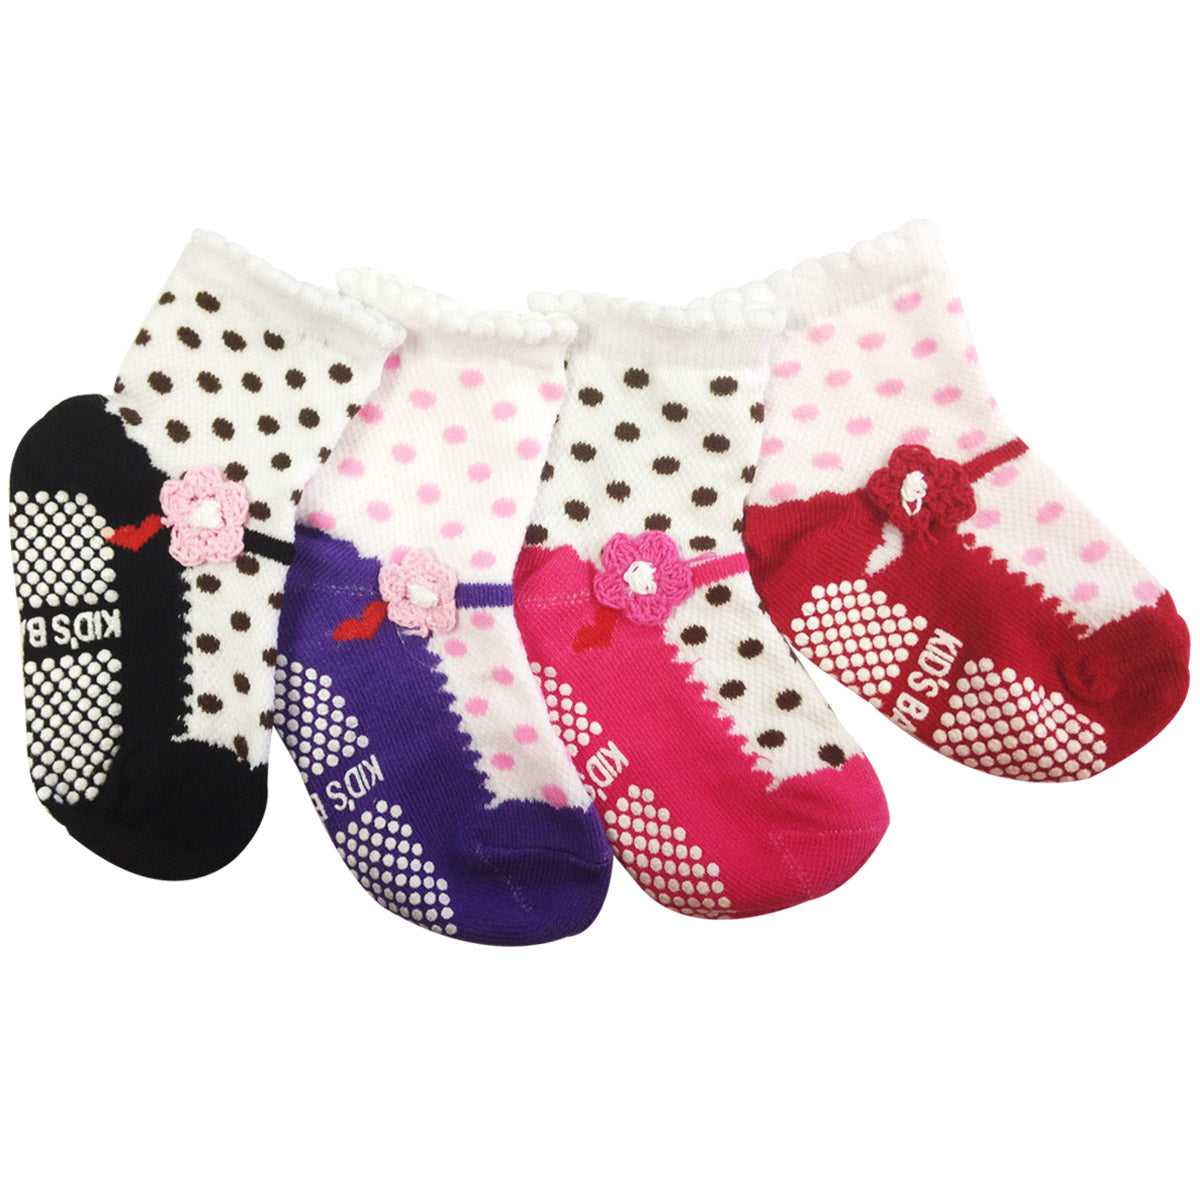 Wrapables Non-slip Mary Jane Mesh Socks for Baby (Set of 4)